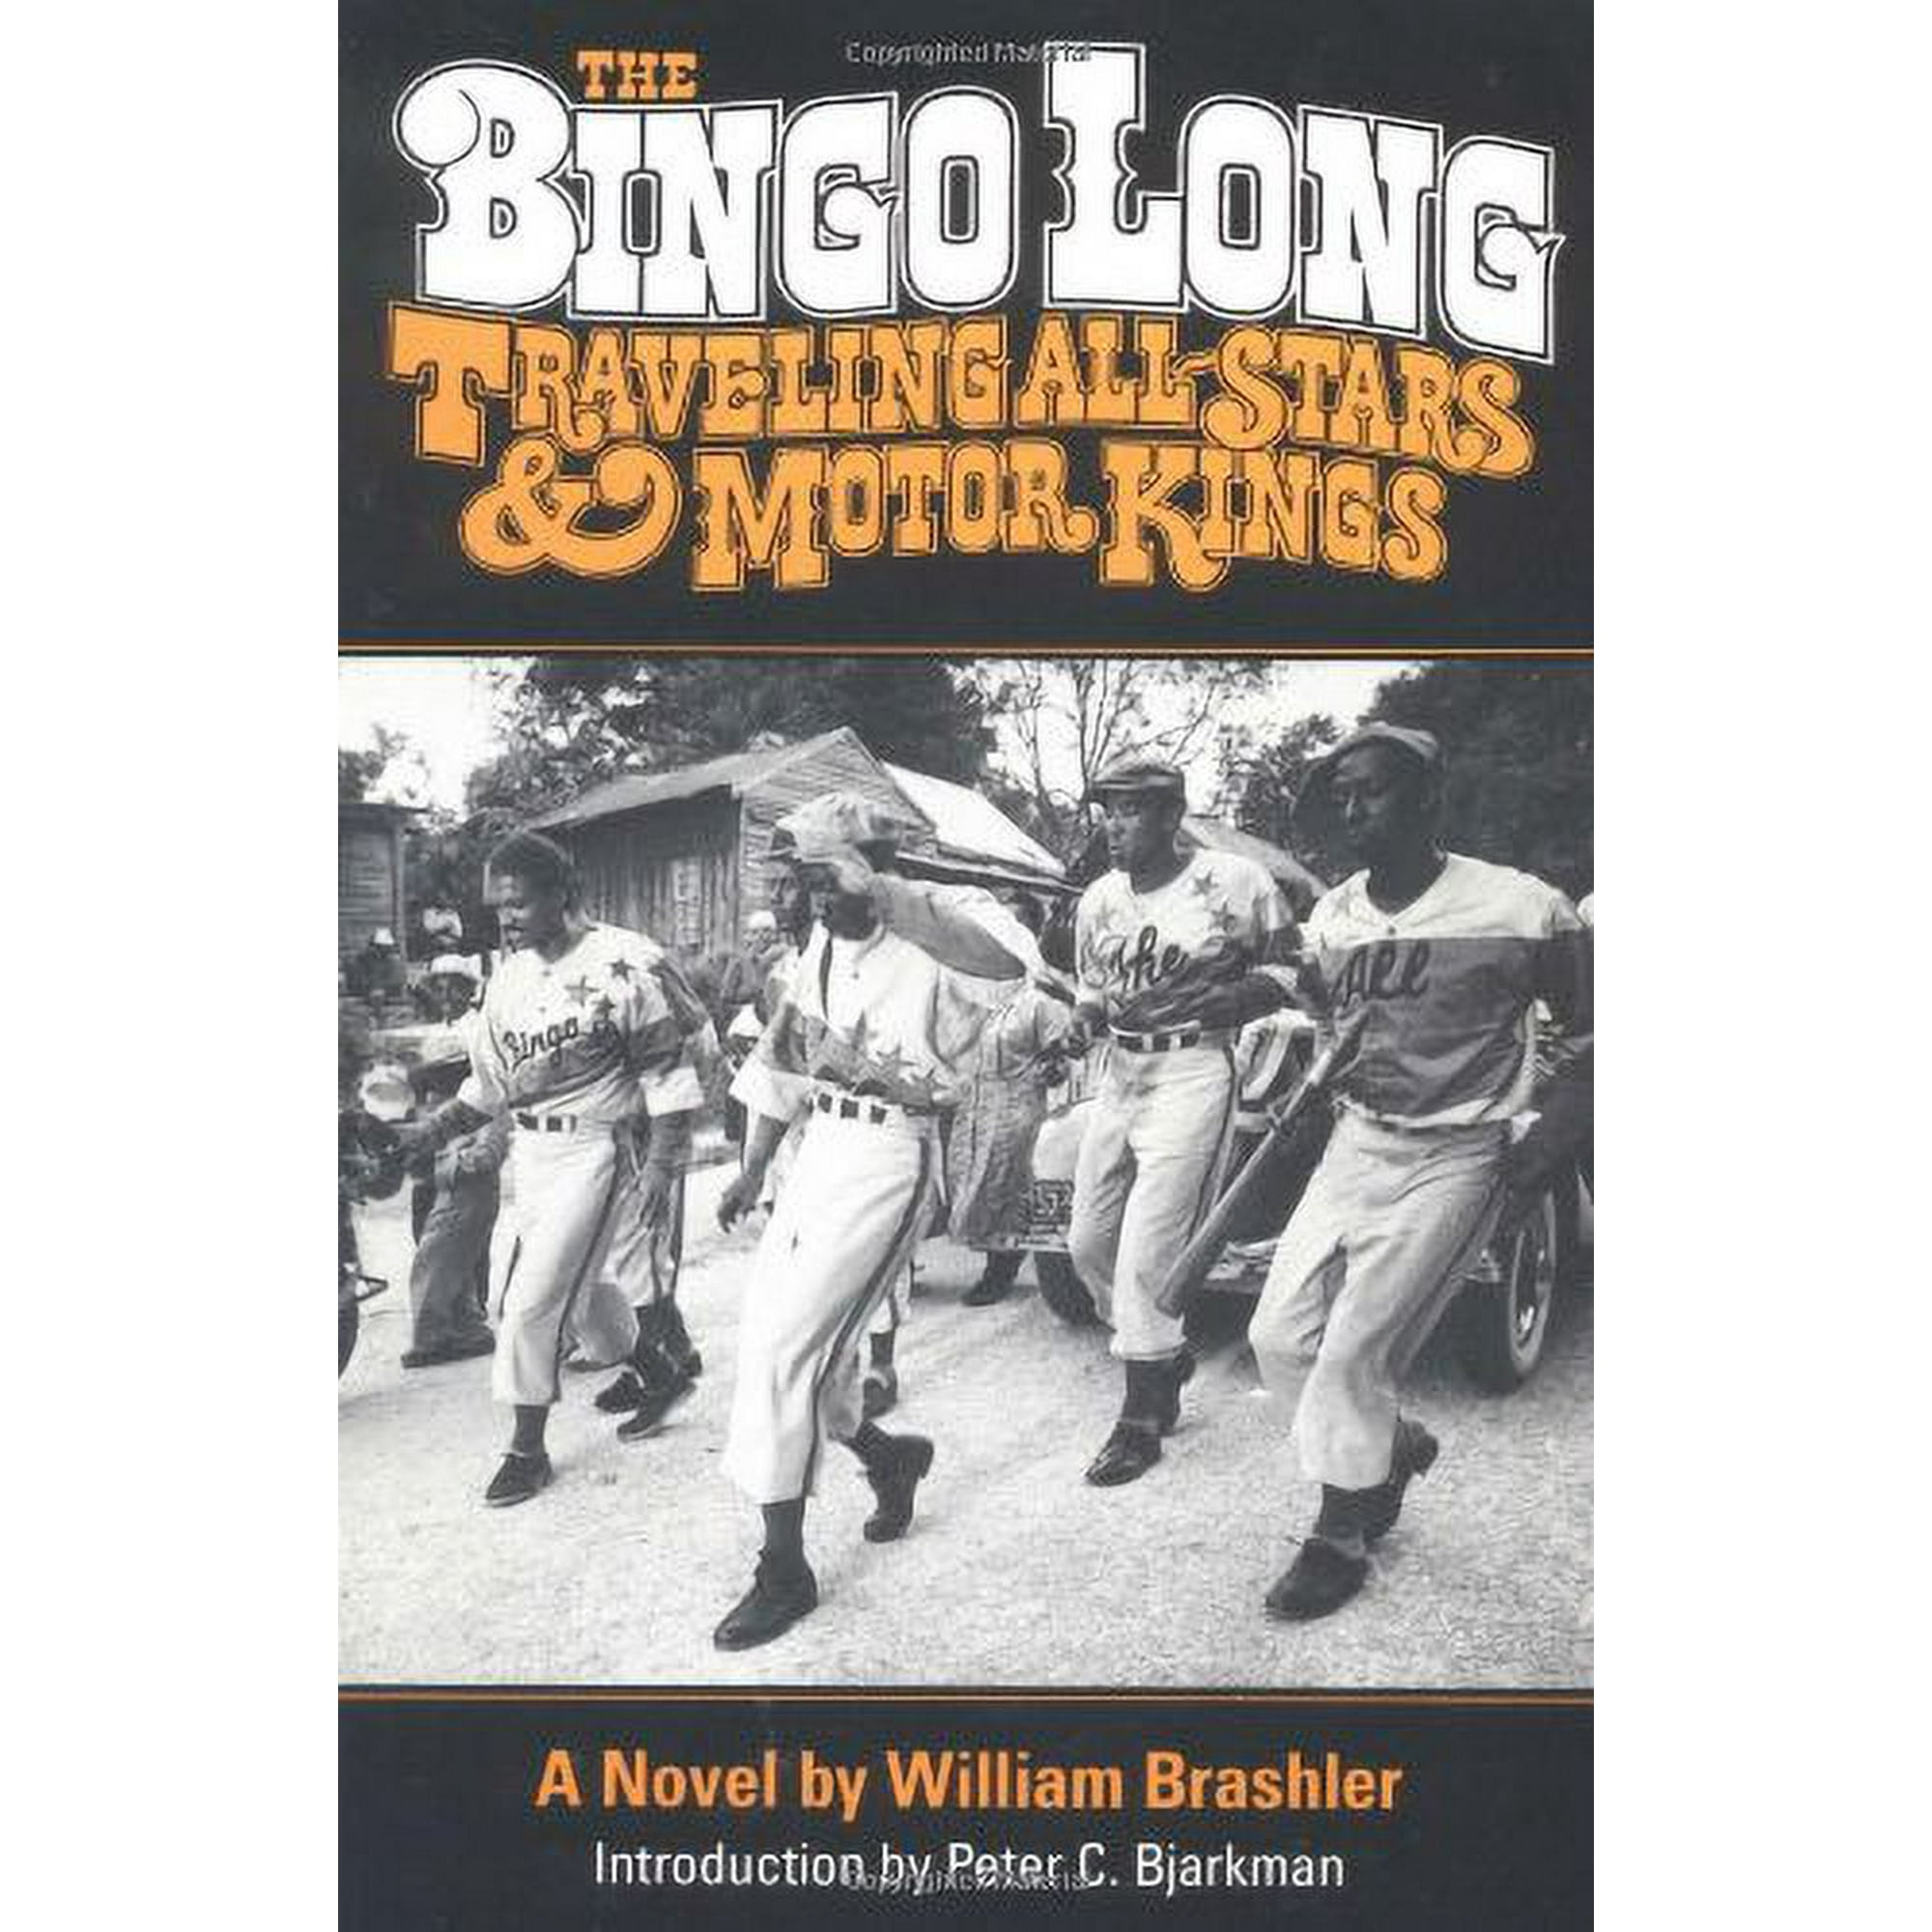 The Bingo Long Traveling All-Stars & Motor Kings - Publicity still